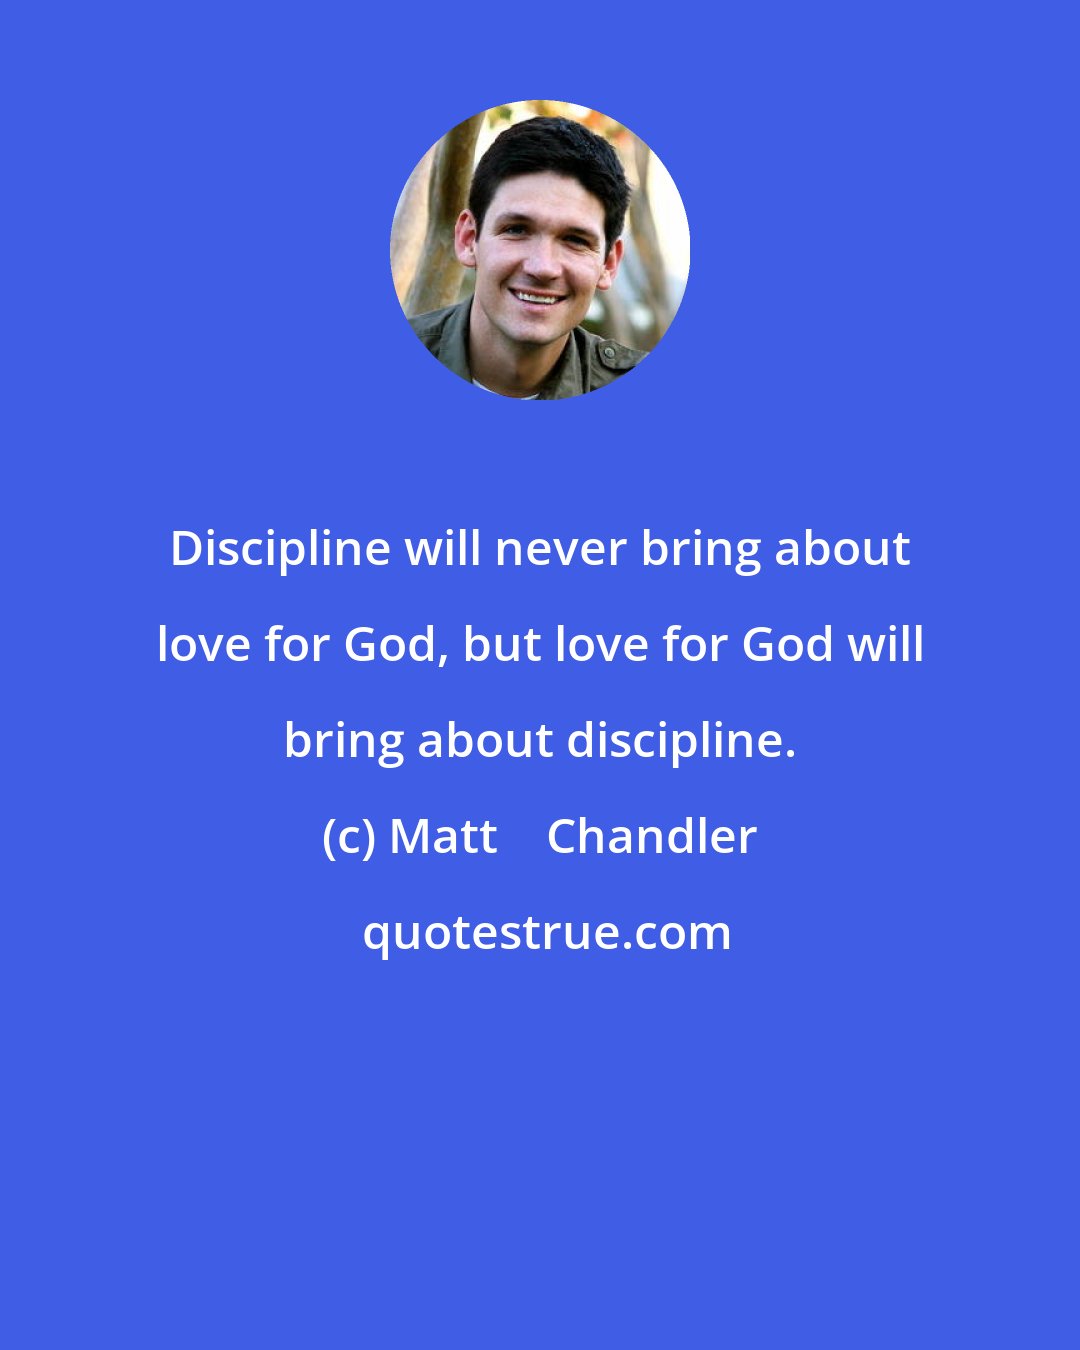 Matt    Chandler: Discipline will never bring about love for God, but love for God will bring about discipline.